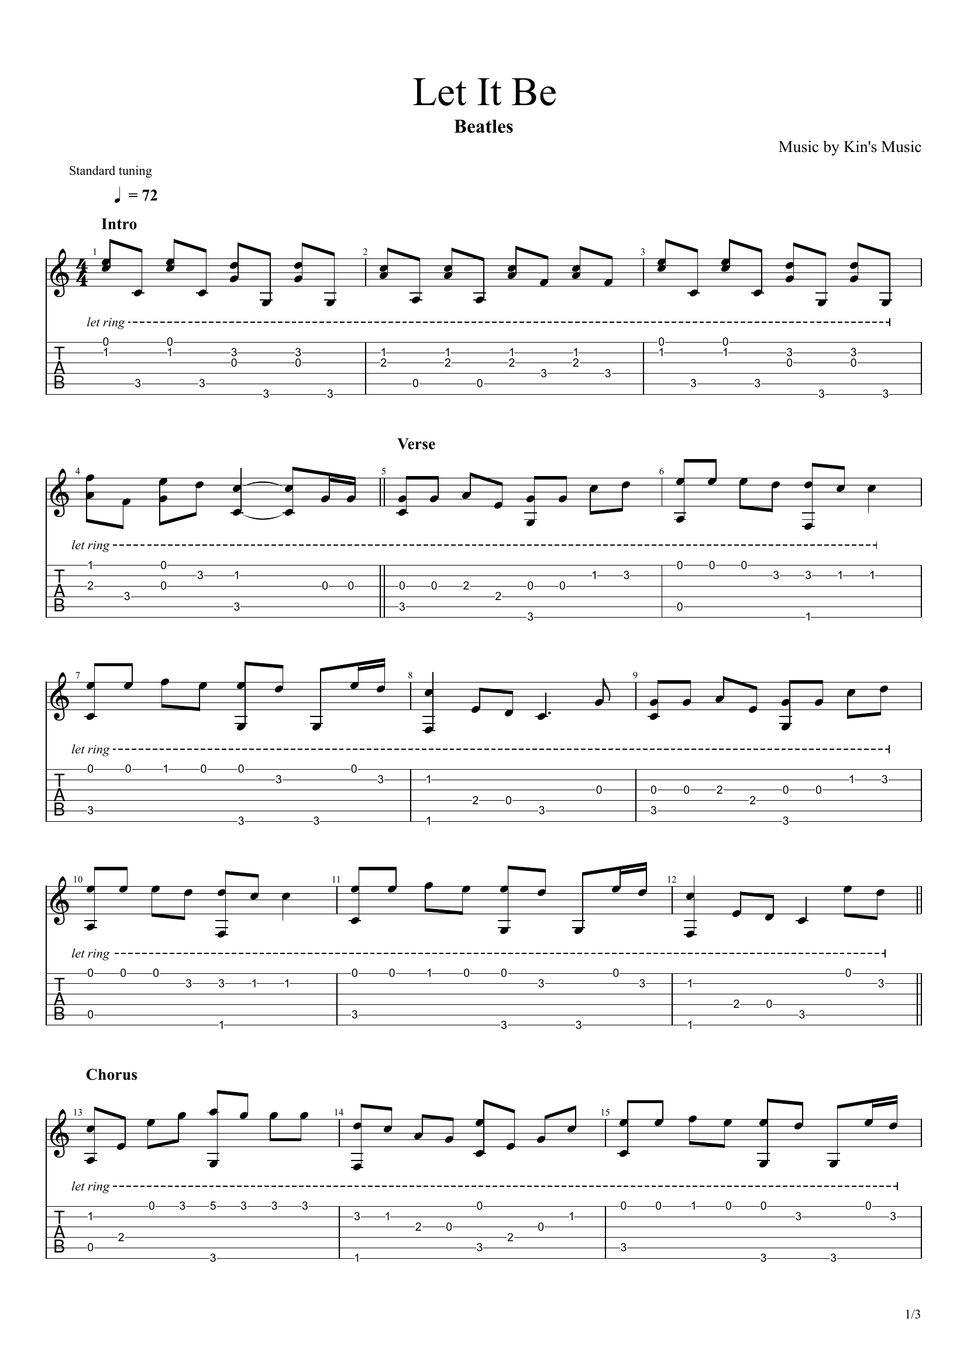 Beatles - Let It Be[Easy Guitar Fingerstyle For Beginner] Sheet by Kin ...